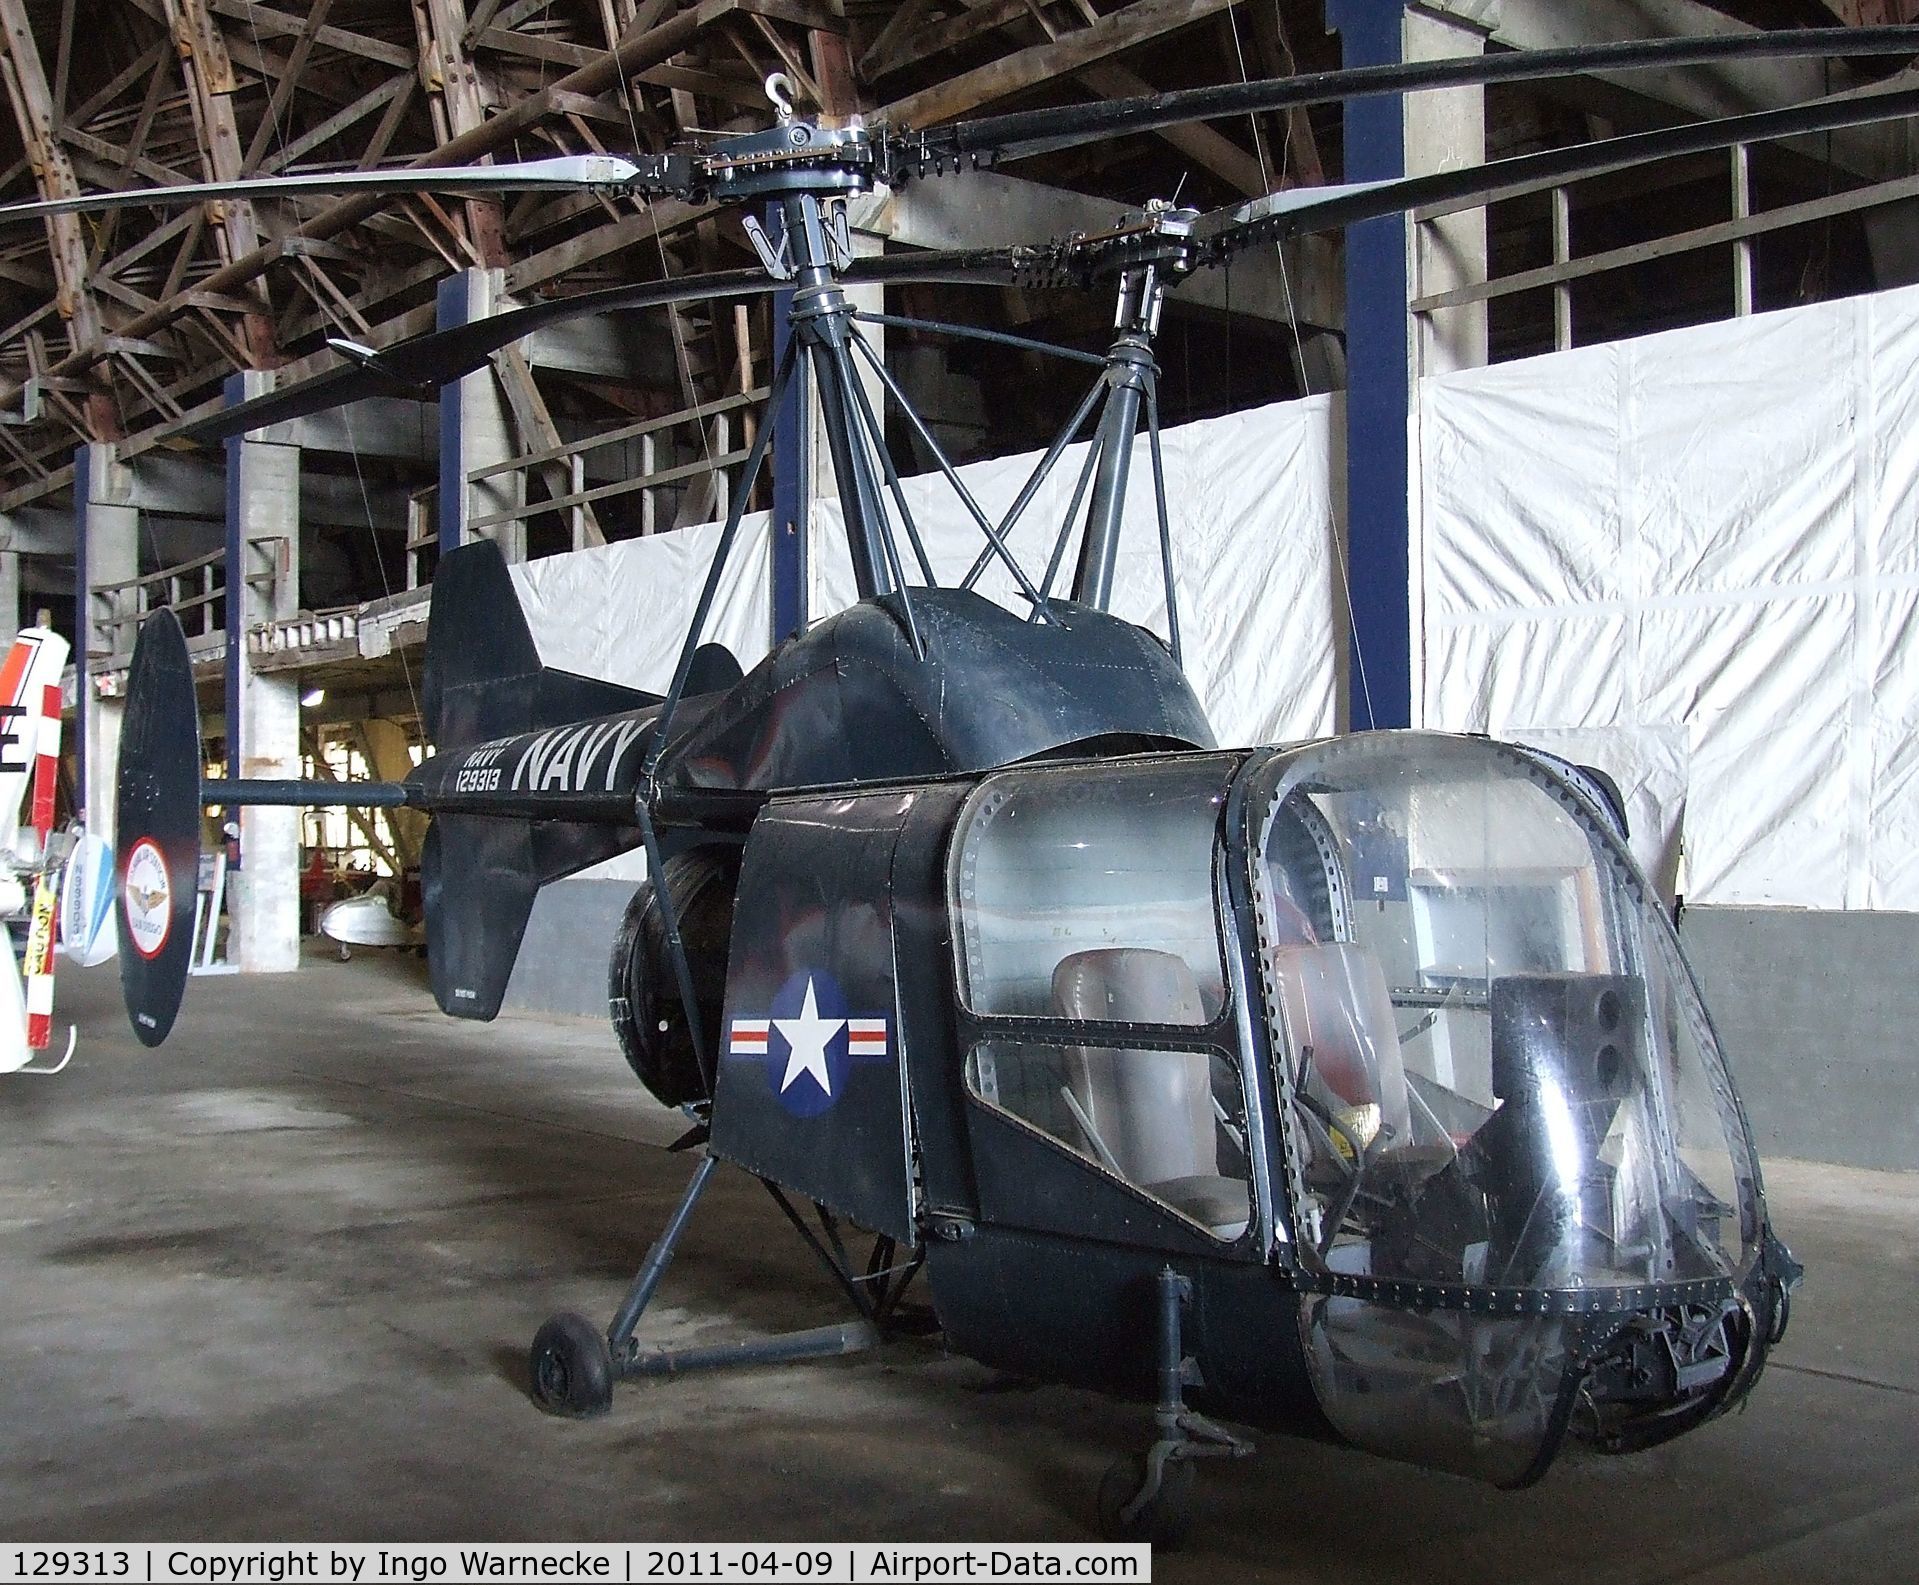 129313, Kaman HTK-1/TH-43A C/N 4-22, Kaman TH-43E (HTK-1) at the Tillamook Air Museum, Tillamook OR